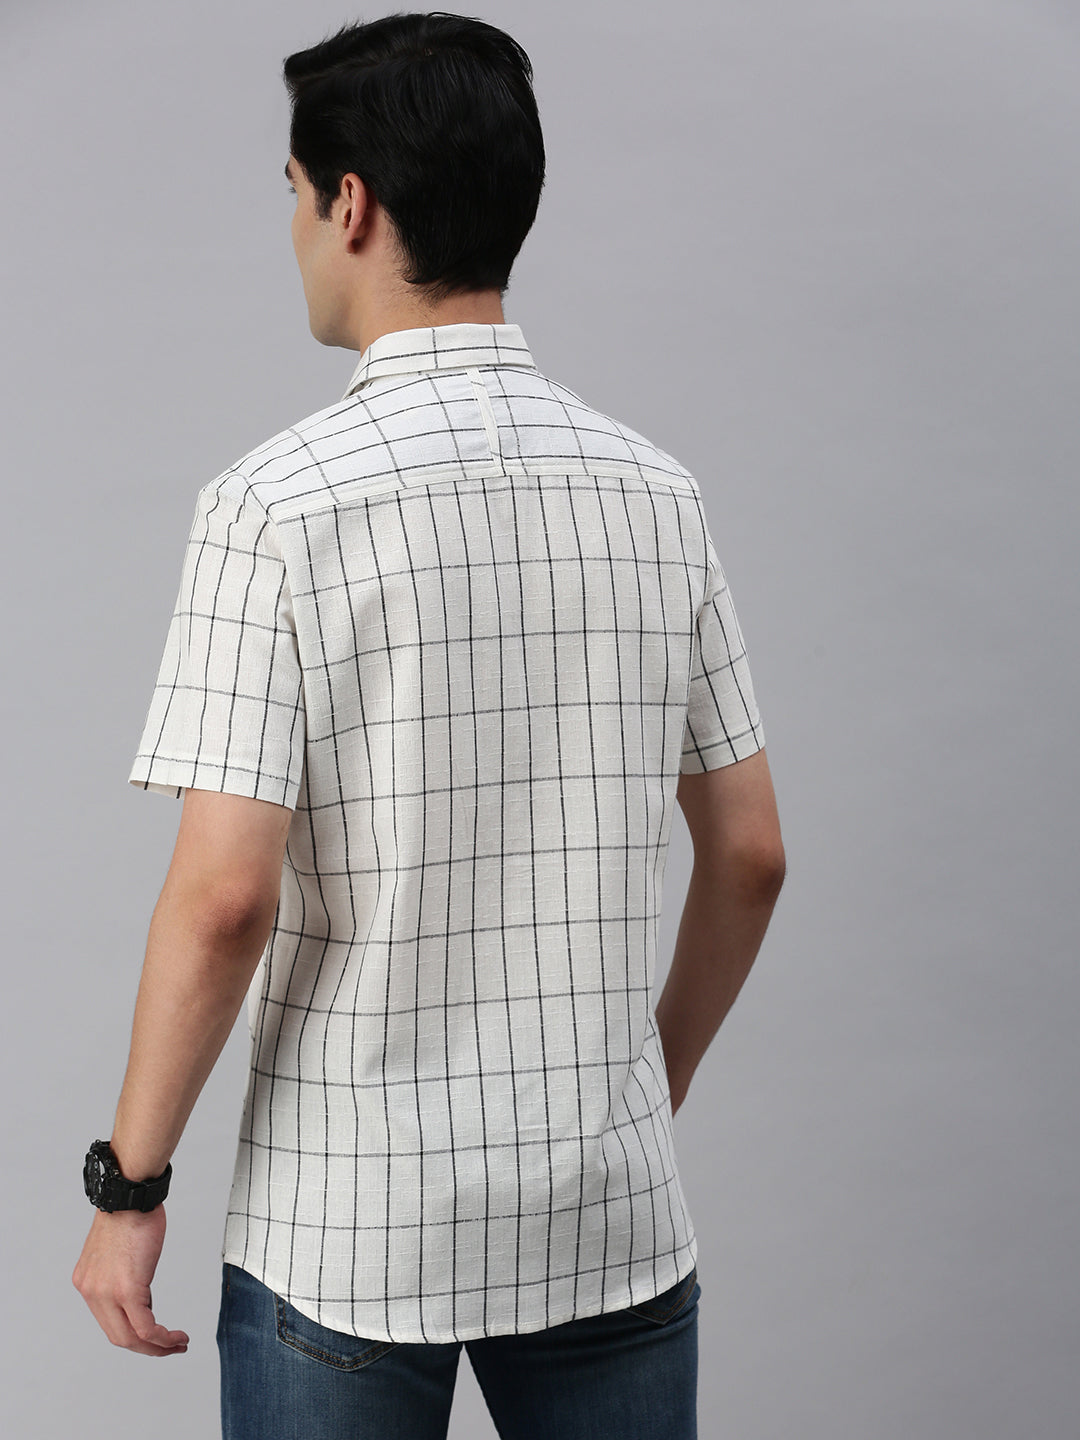 Classic Polo Men's Cotton Half Sleeve Checked Slim Fit Collar Neck Cream Color Woven Shirt | So1-113 A